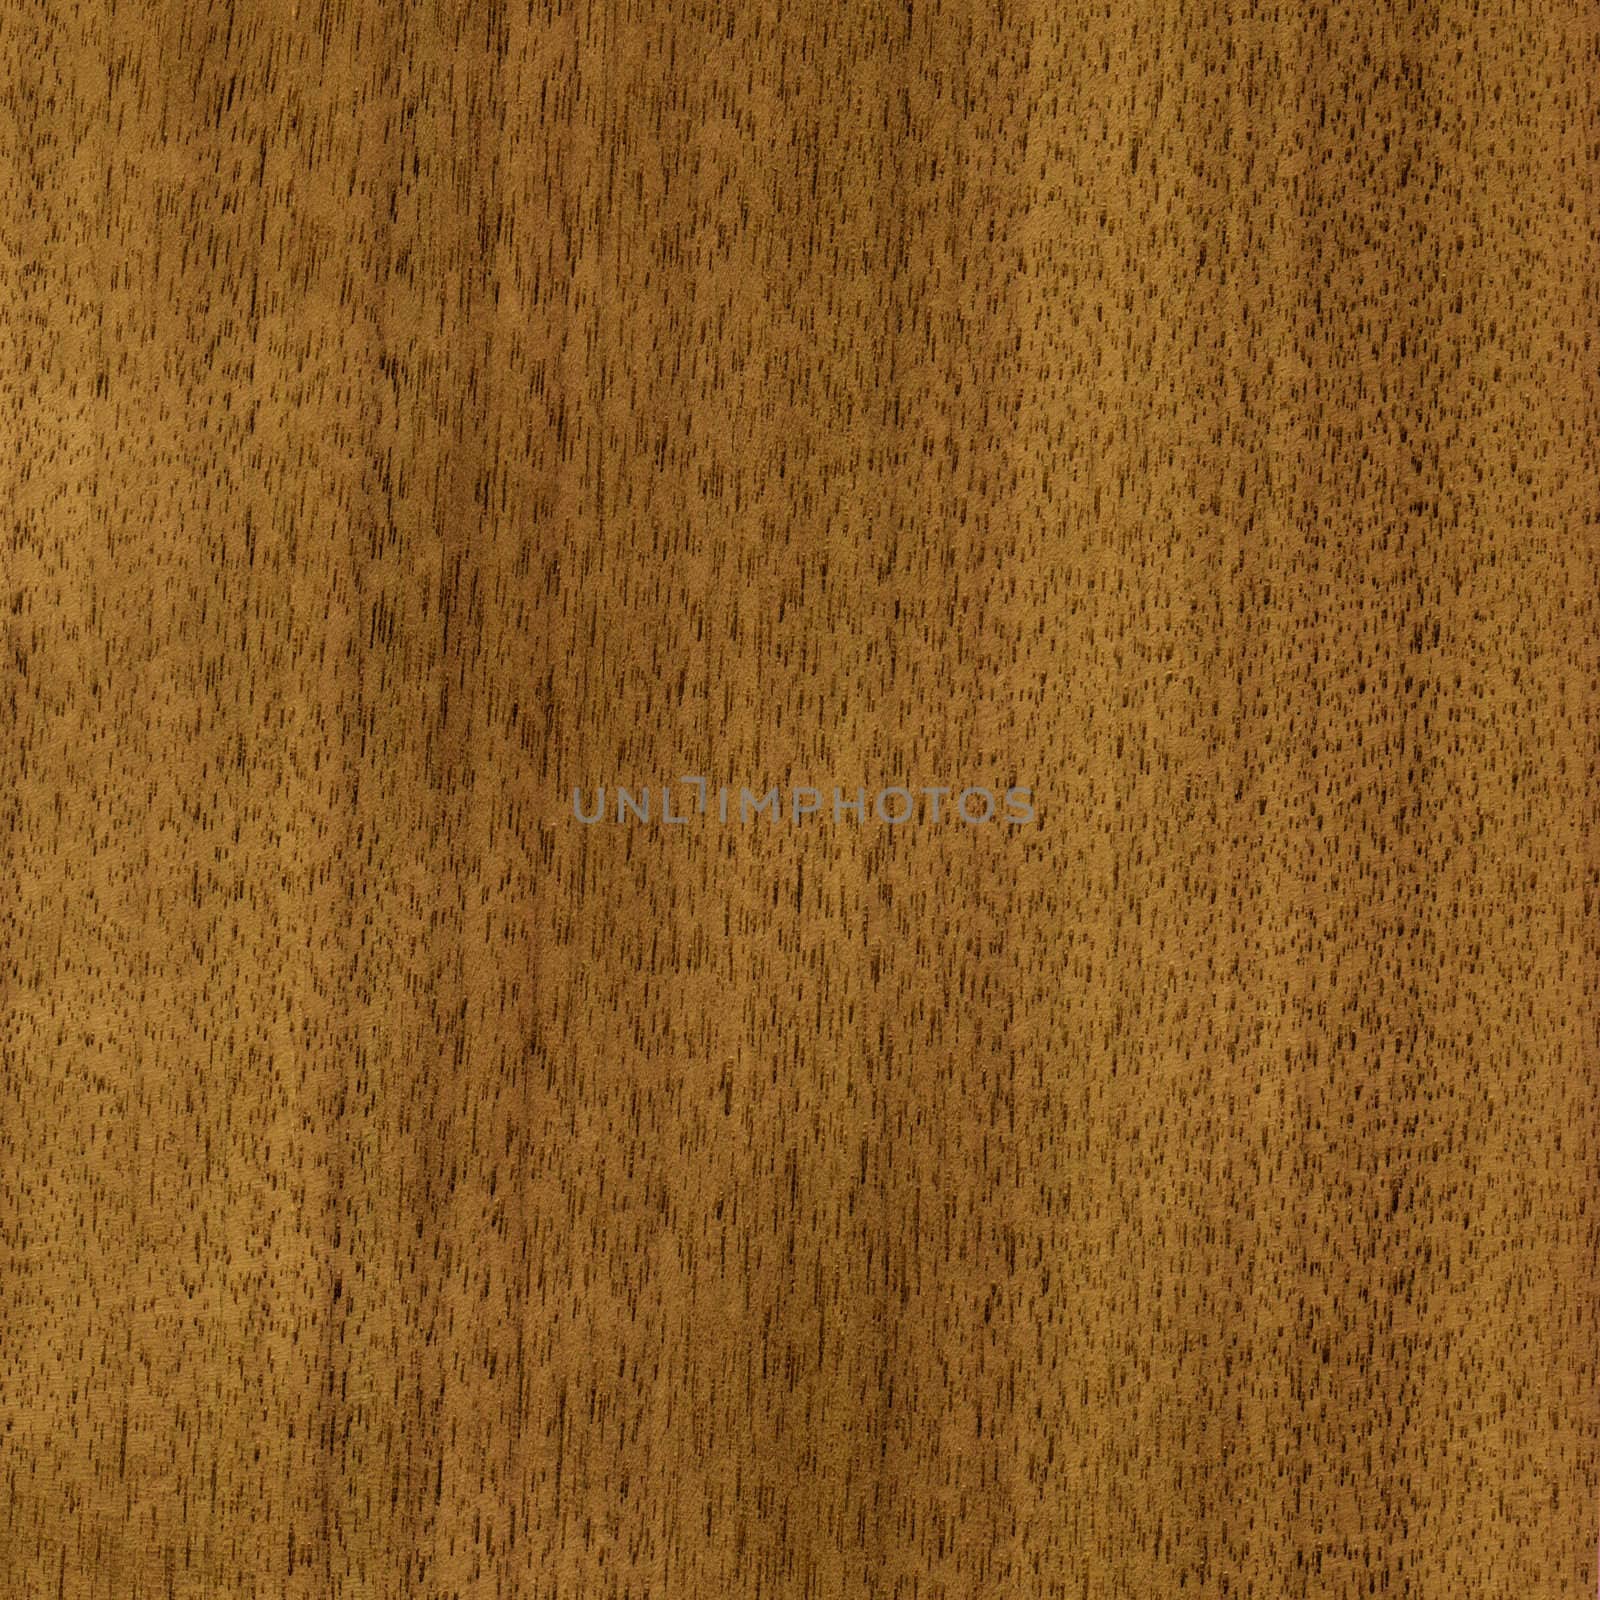 Wood, veneer nutwood tree, natural finishing material